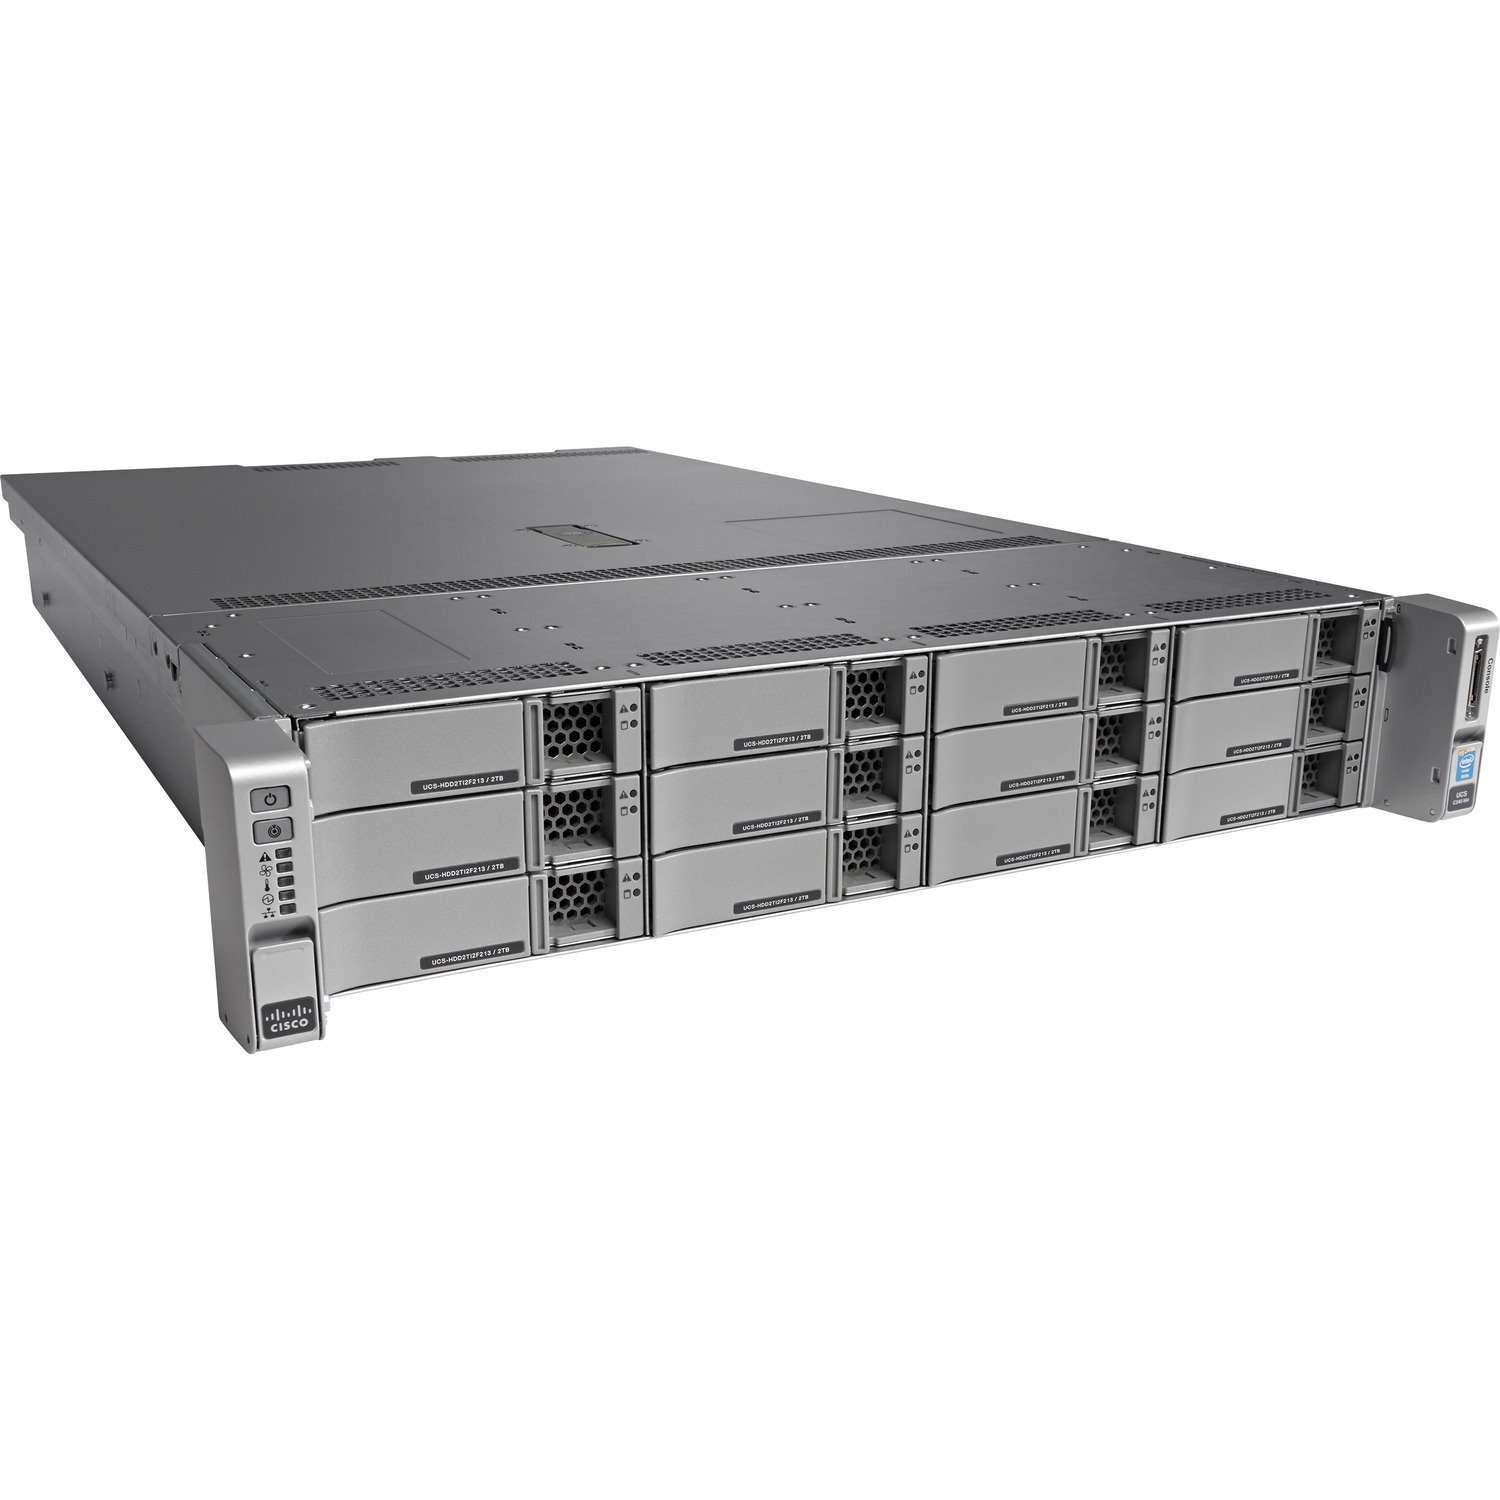 Cisco C240 M4 2U Rack Server - 2 x Intel Xeon E5-2680 v4 2.40 GHz - 256 GB RAM - 19.20 TB HDD - (16 x 1.2TB) HDD Configuration - Serial ATA/600 Controller